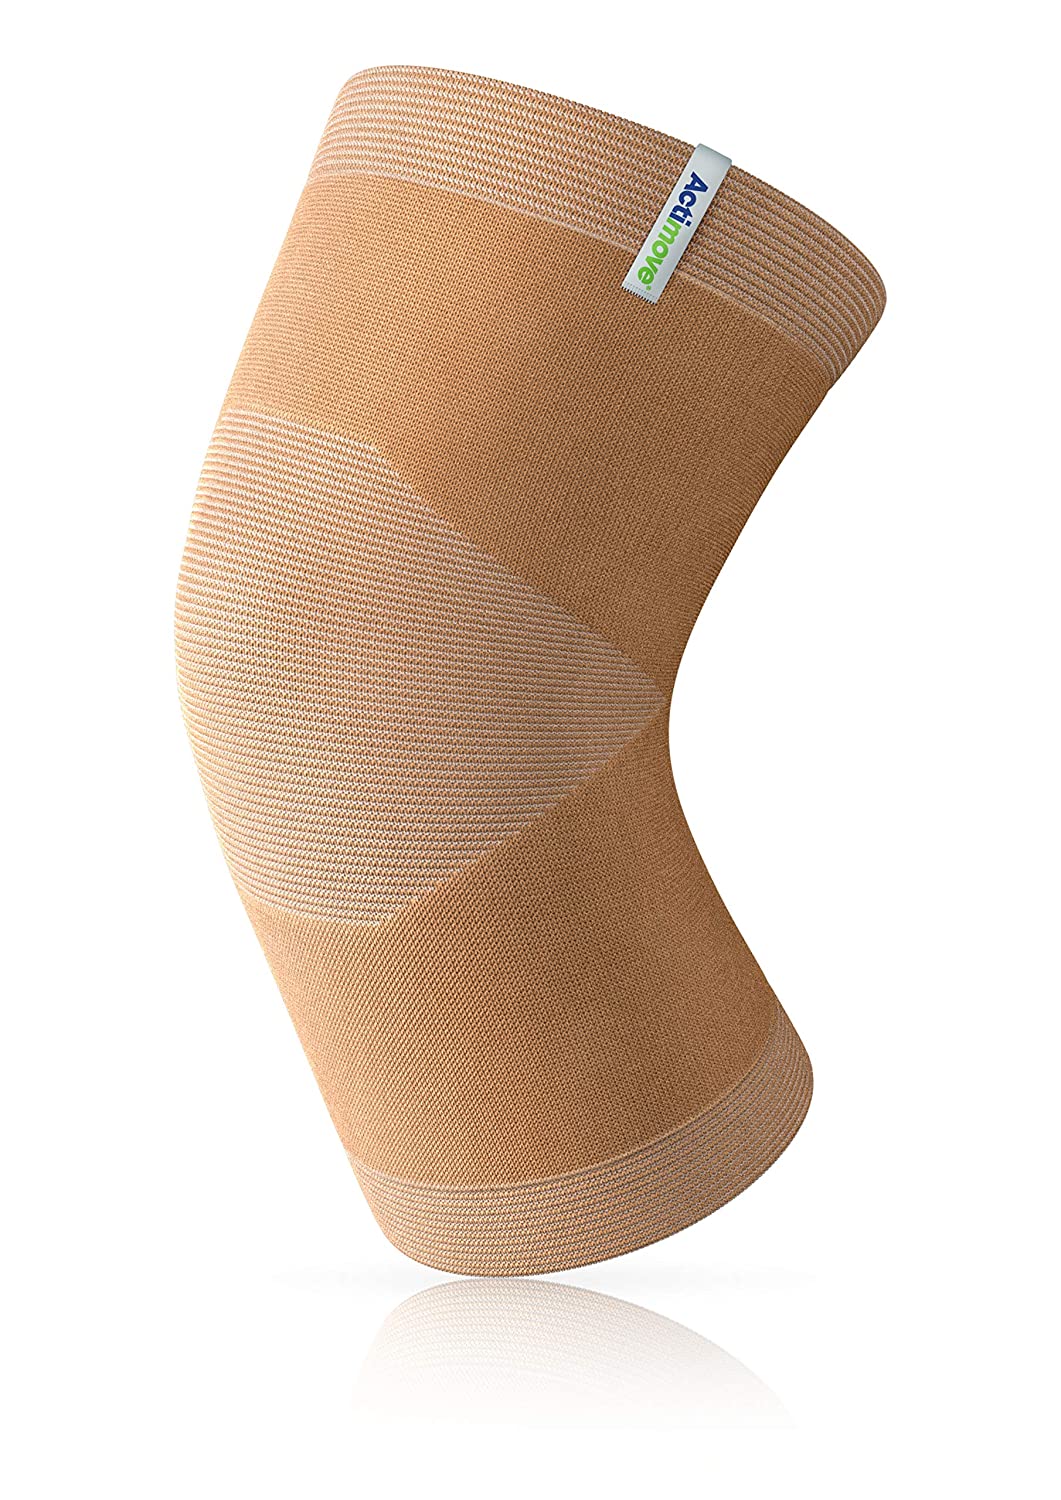 Actimove Arthritis Pain Relief Support, Knee, Sm, Beige - Ea/1 - Home Health Store Inc